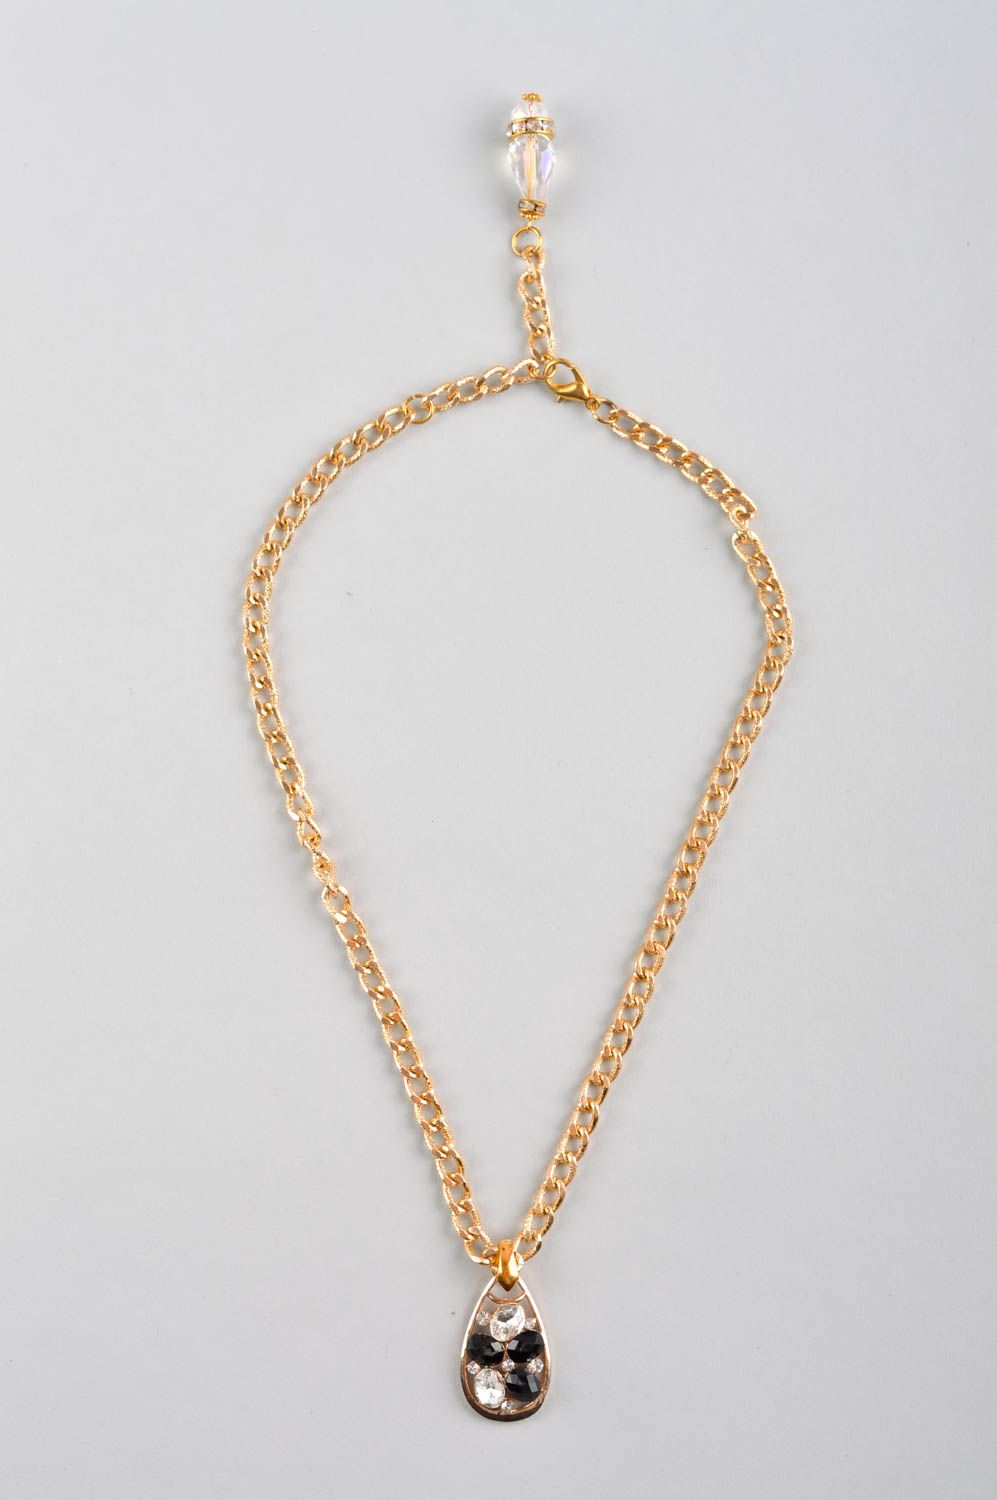 Handmade jewelry pendant necklace unique jewelry fashion accessories for women photo 2